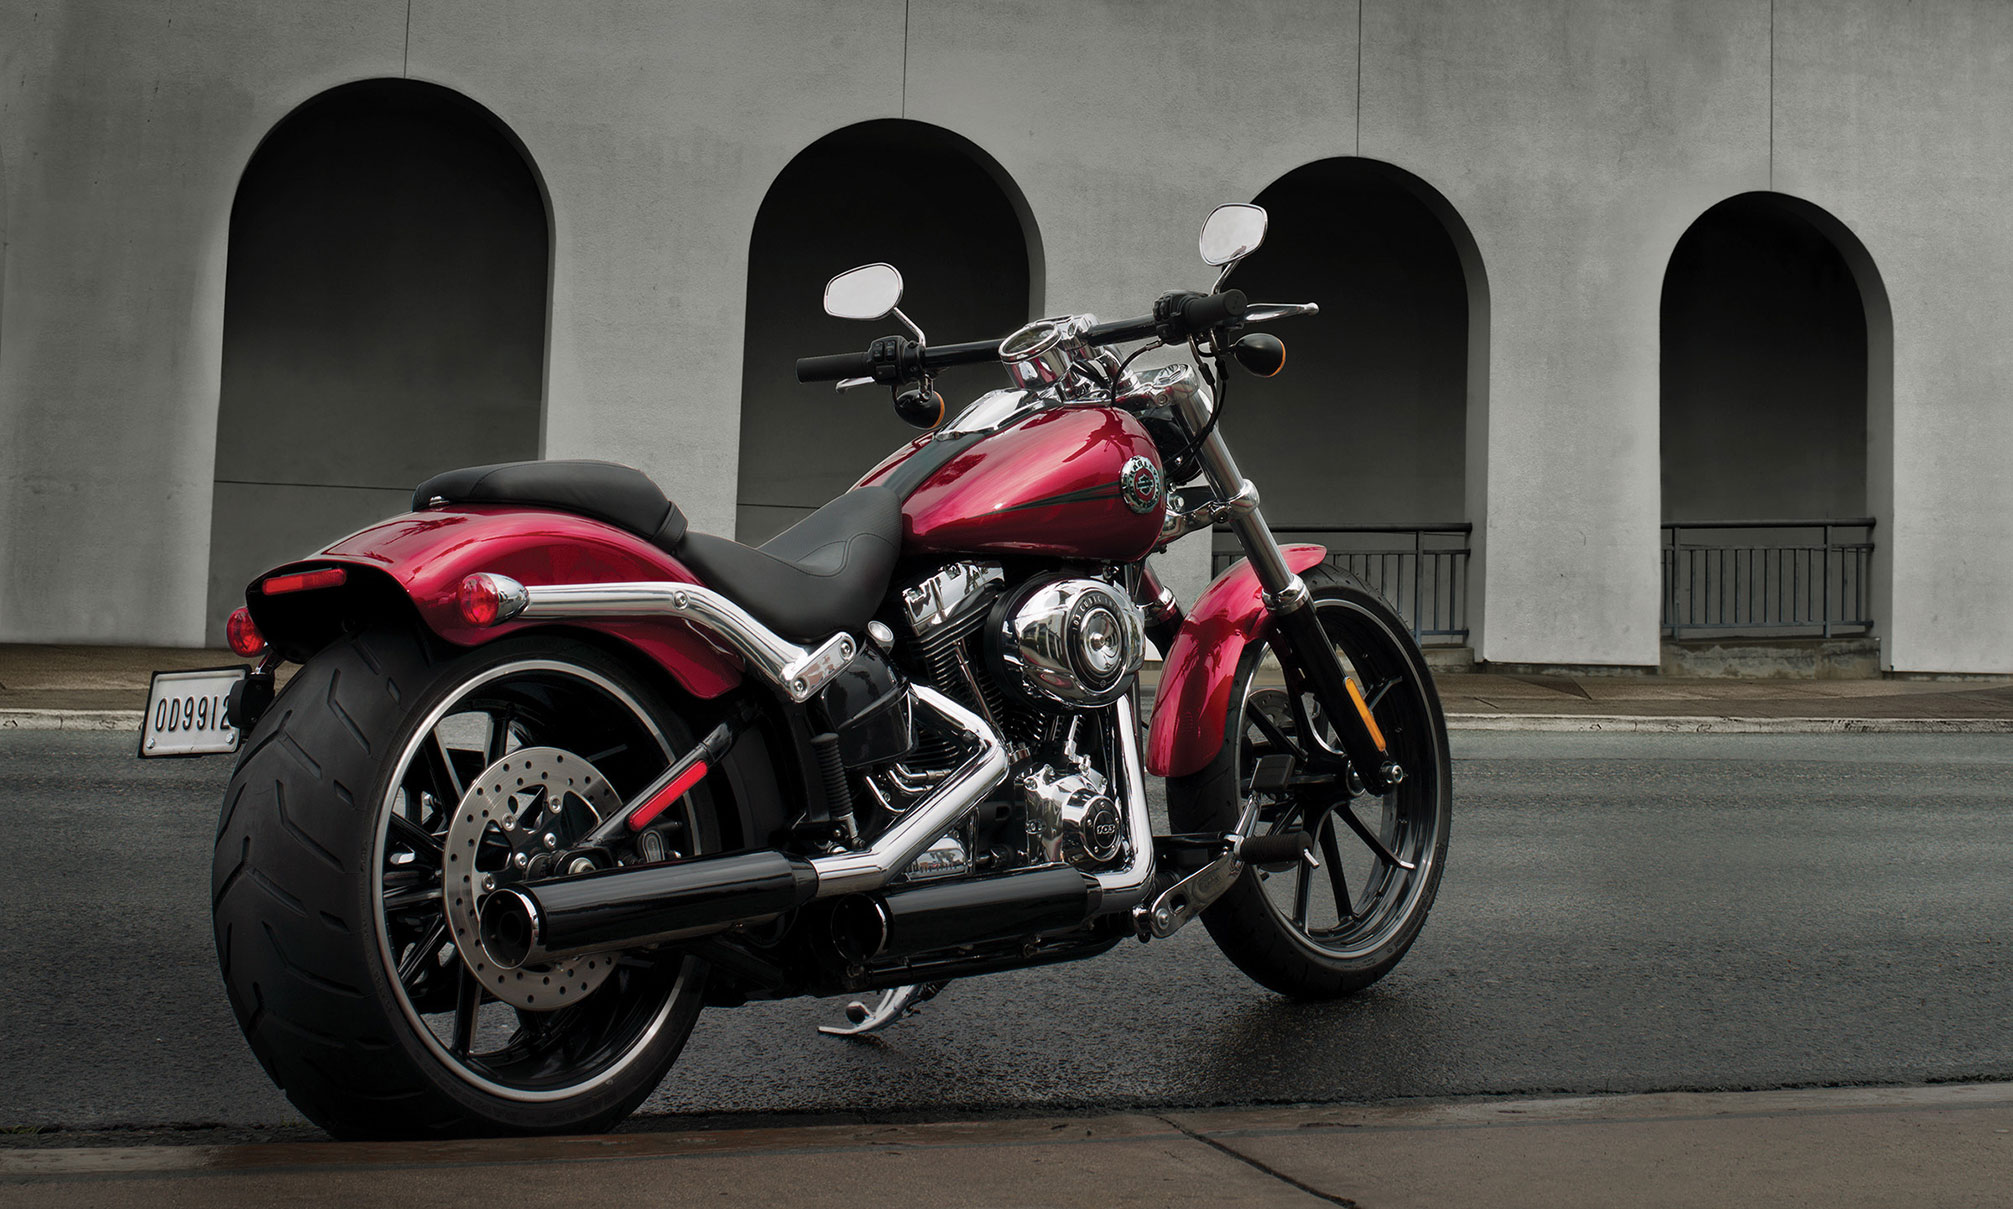 Harley-Davidson Breakout HD wallpapers, Desktop wallpaper - most viewed